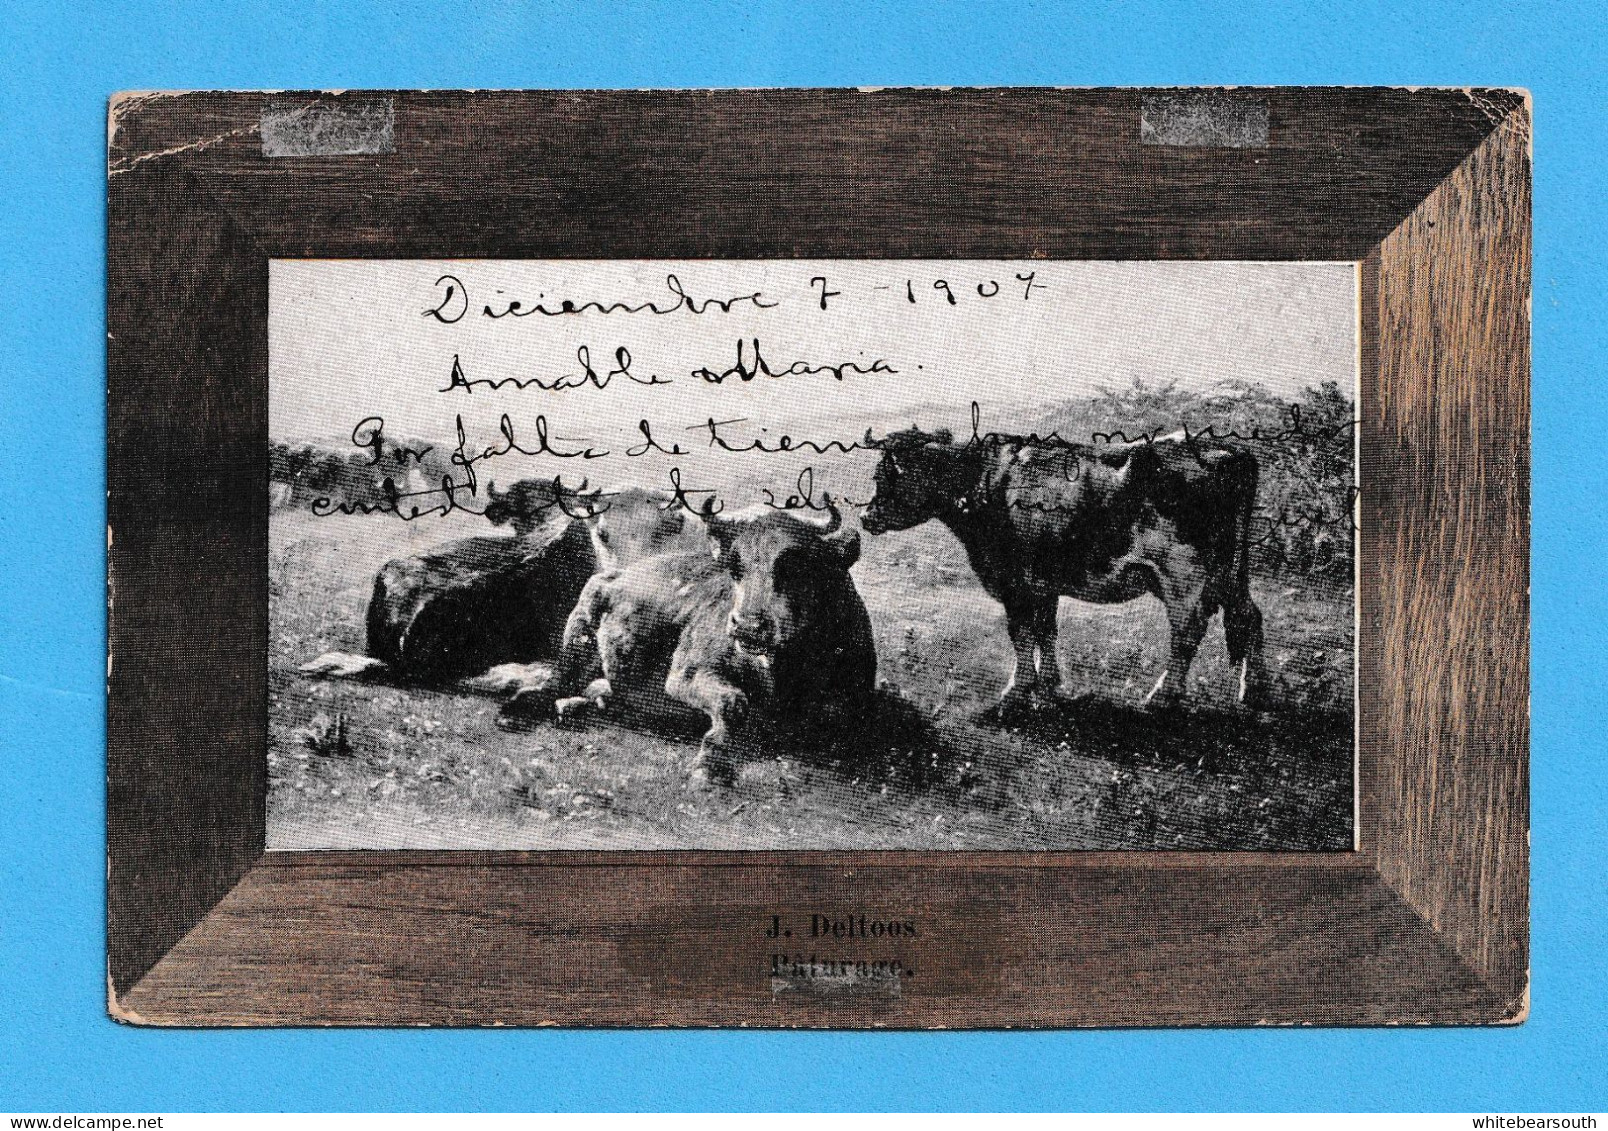 460 - FRANCE FARM CAMPO J. DELTOOS PATORAGE PASTOREO TORO COW VACA GANADO  RARE  POSTCARD - Taureaux